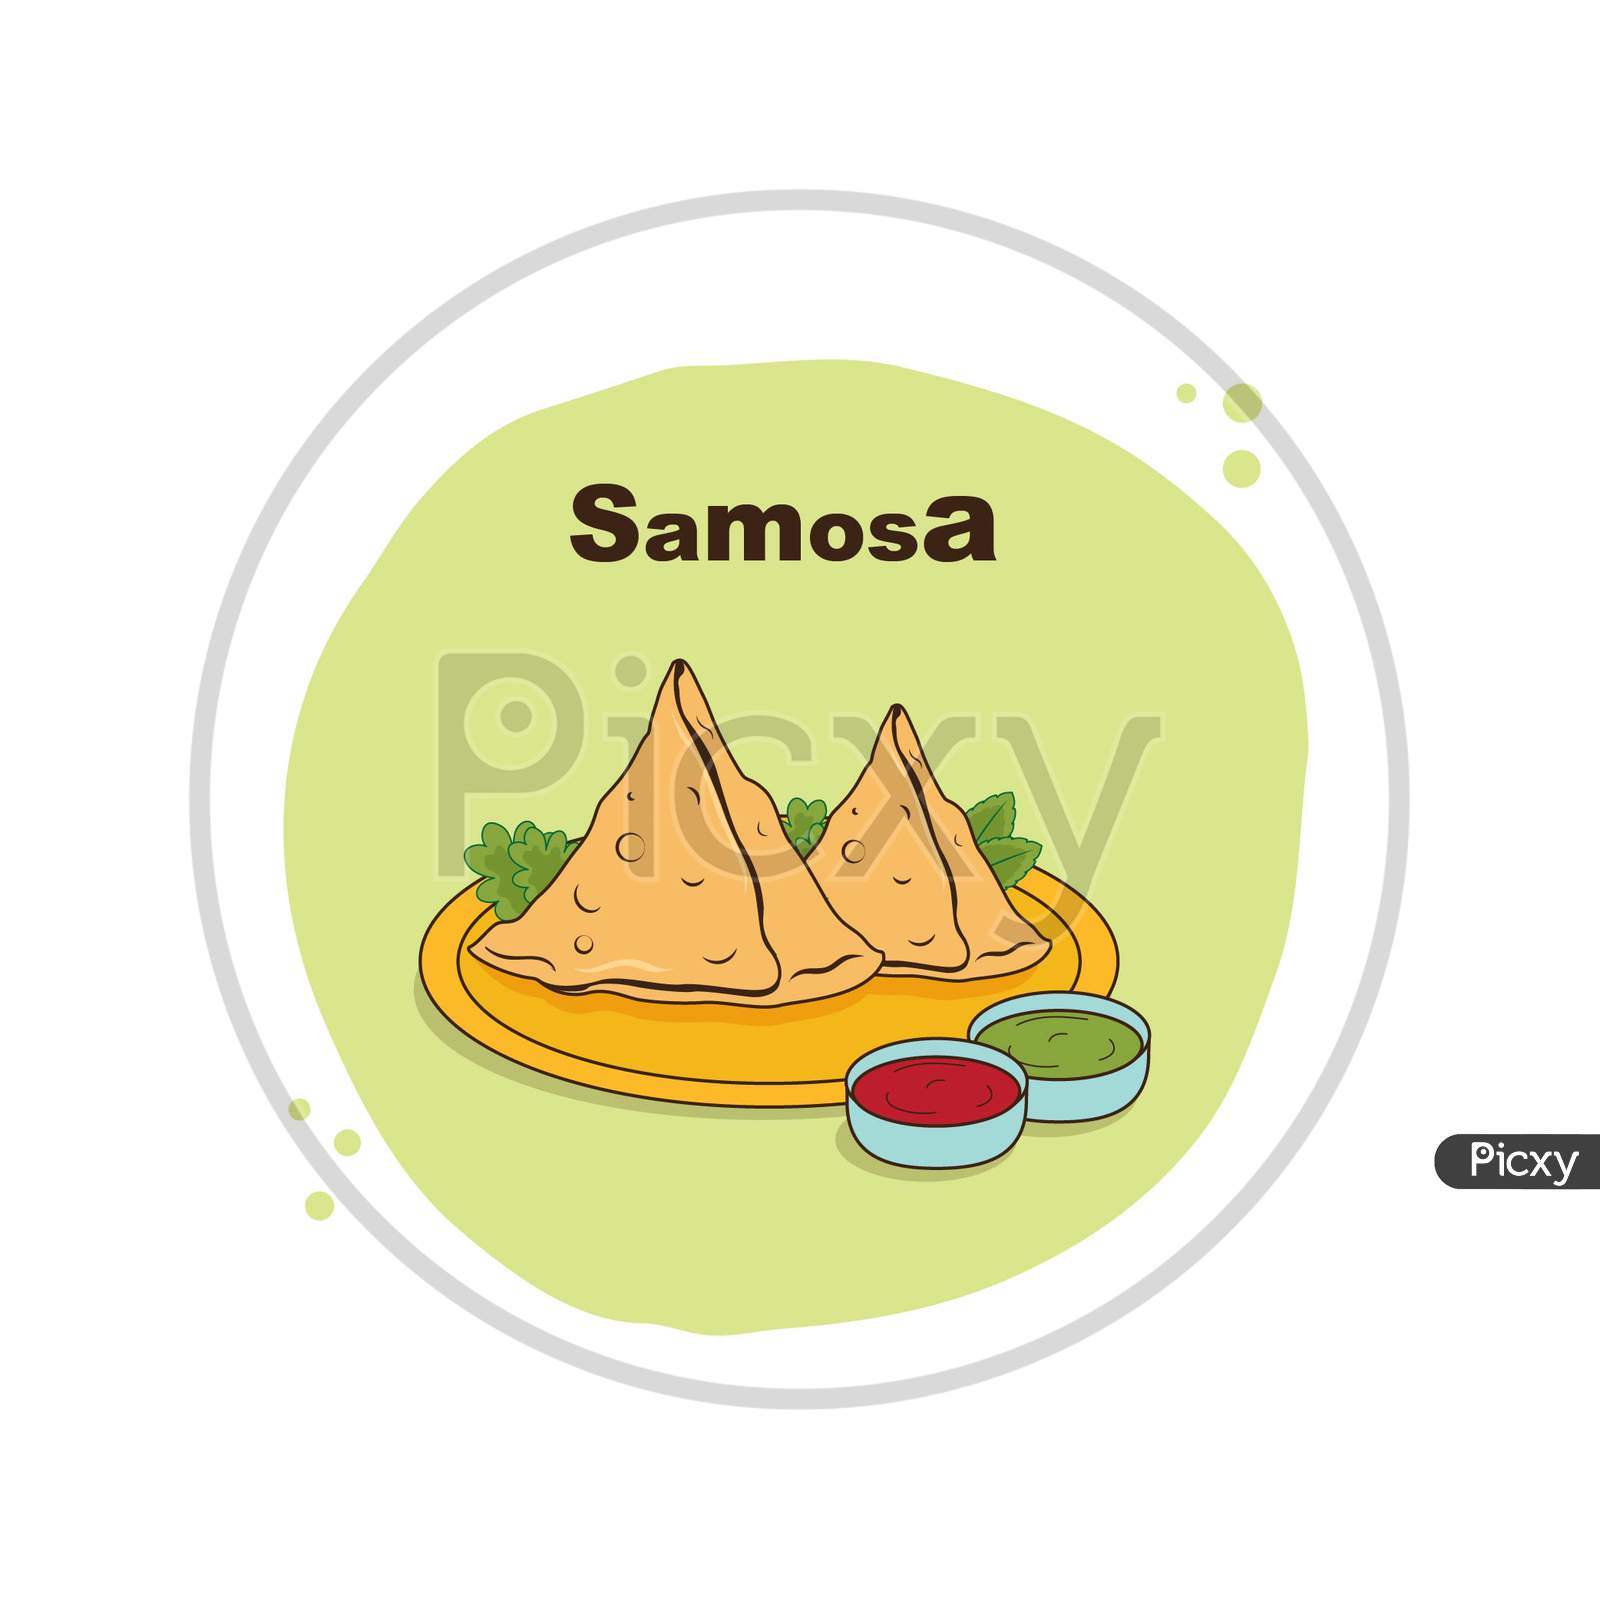 Indian street food samosa with chutney illustration | Samosa with chutney